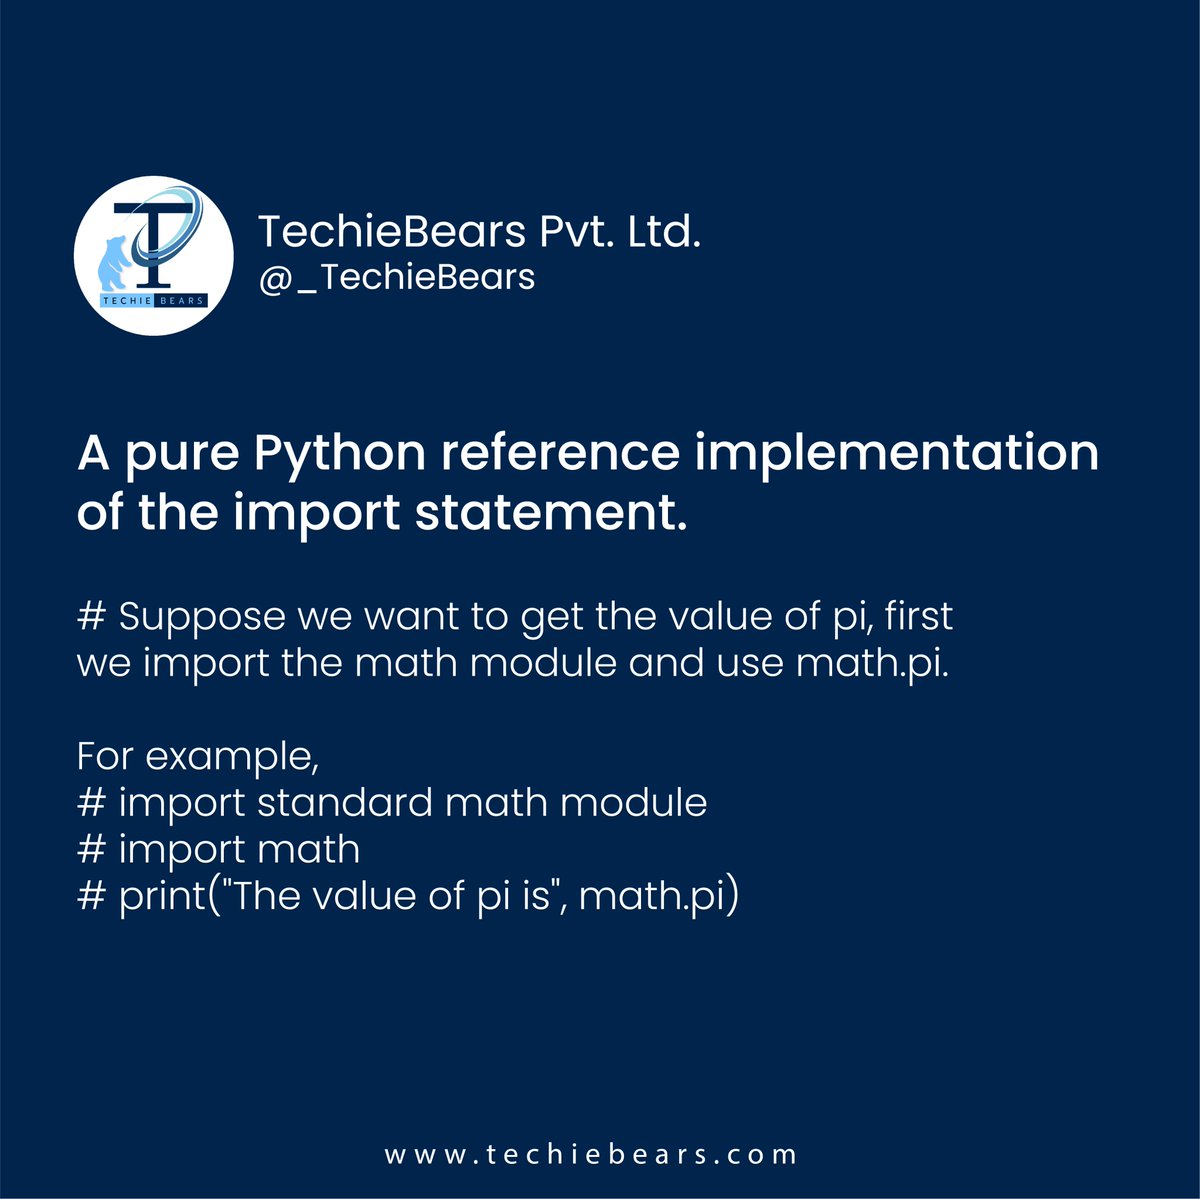 Here are some new Python 3.1 features and updates.
.
.
.
#Python #pythonprogramming #Python3 #pythoncode #backend #development #pythonlanguage #pythondeveloper #ITupdates #ITupdates #pythonlearning #techupdates #technologyupdates #techupdates #pythontechnology #languagepython